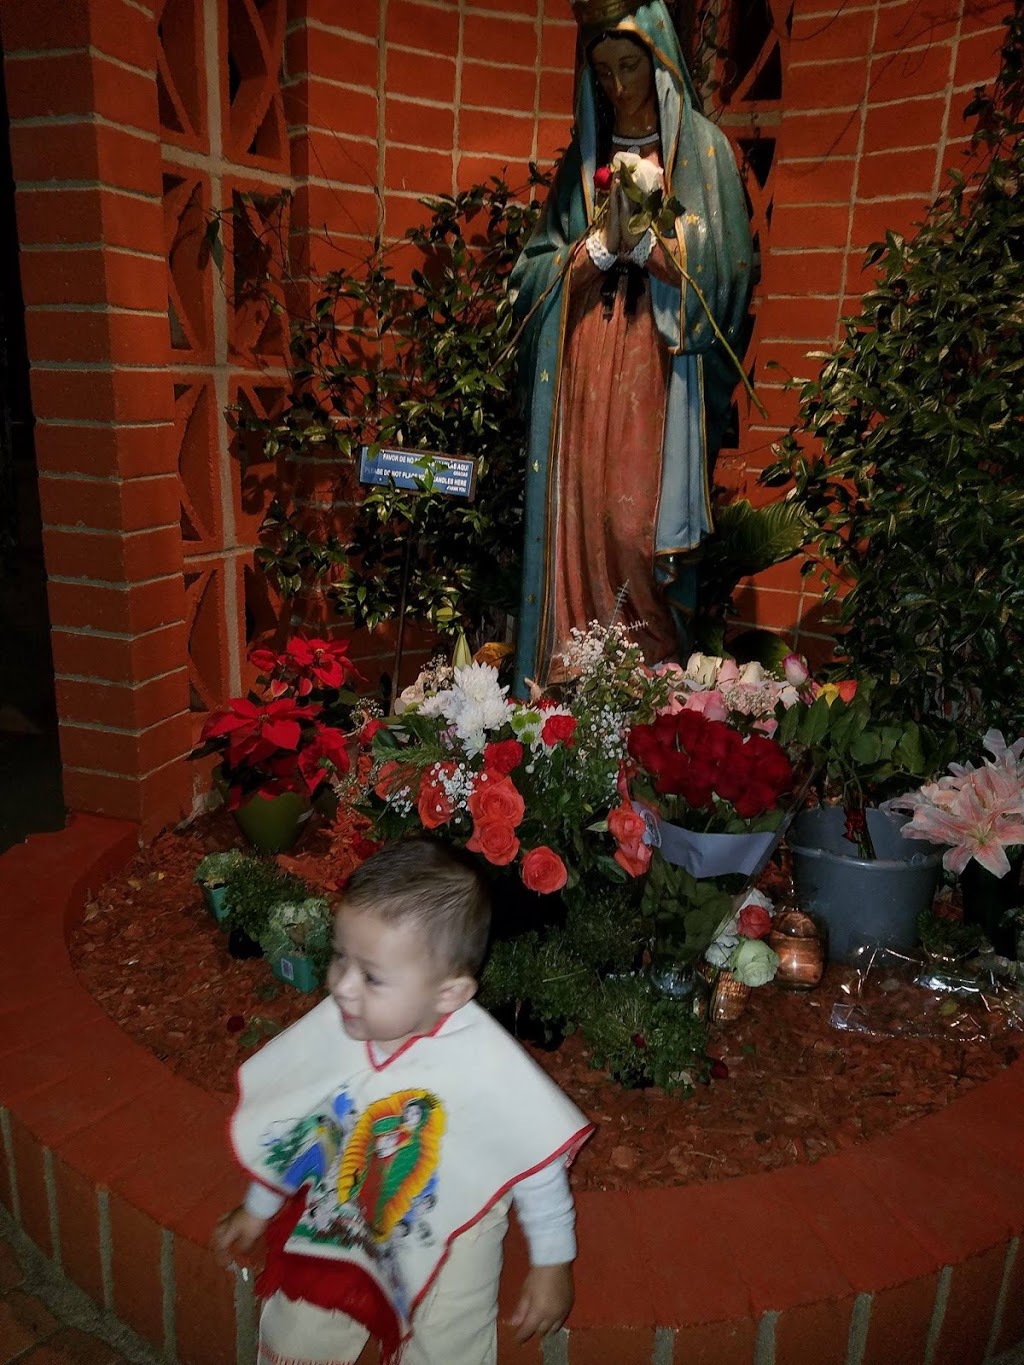 Our Lady of Guadalupe Church | 345 Anita St, Chula Vista, CA 91911 | Phone: (619) 422-3977